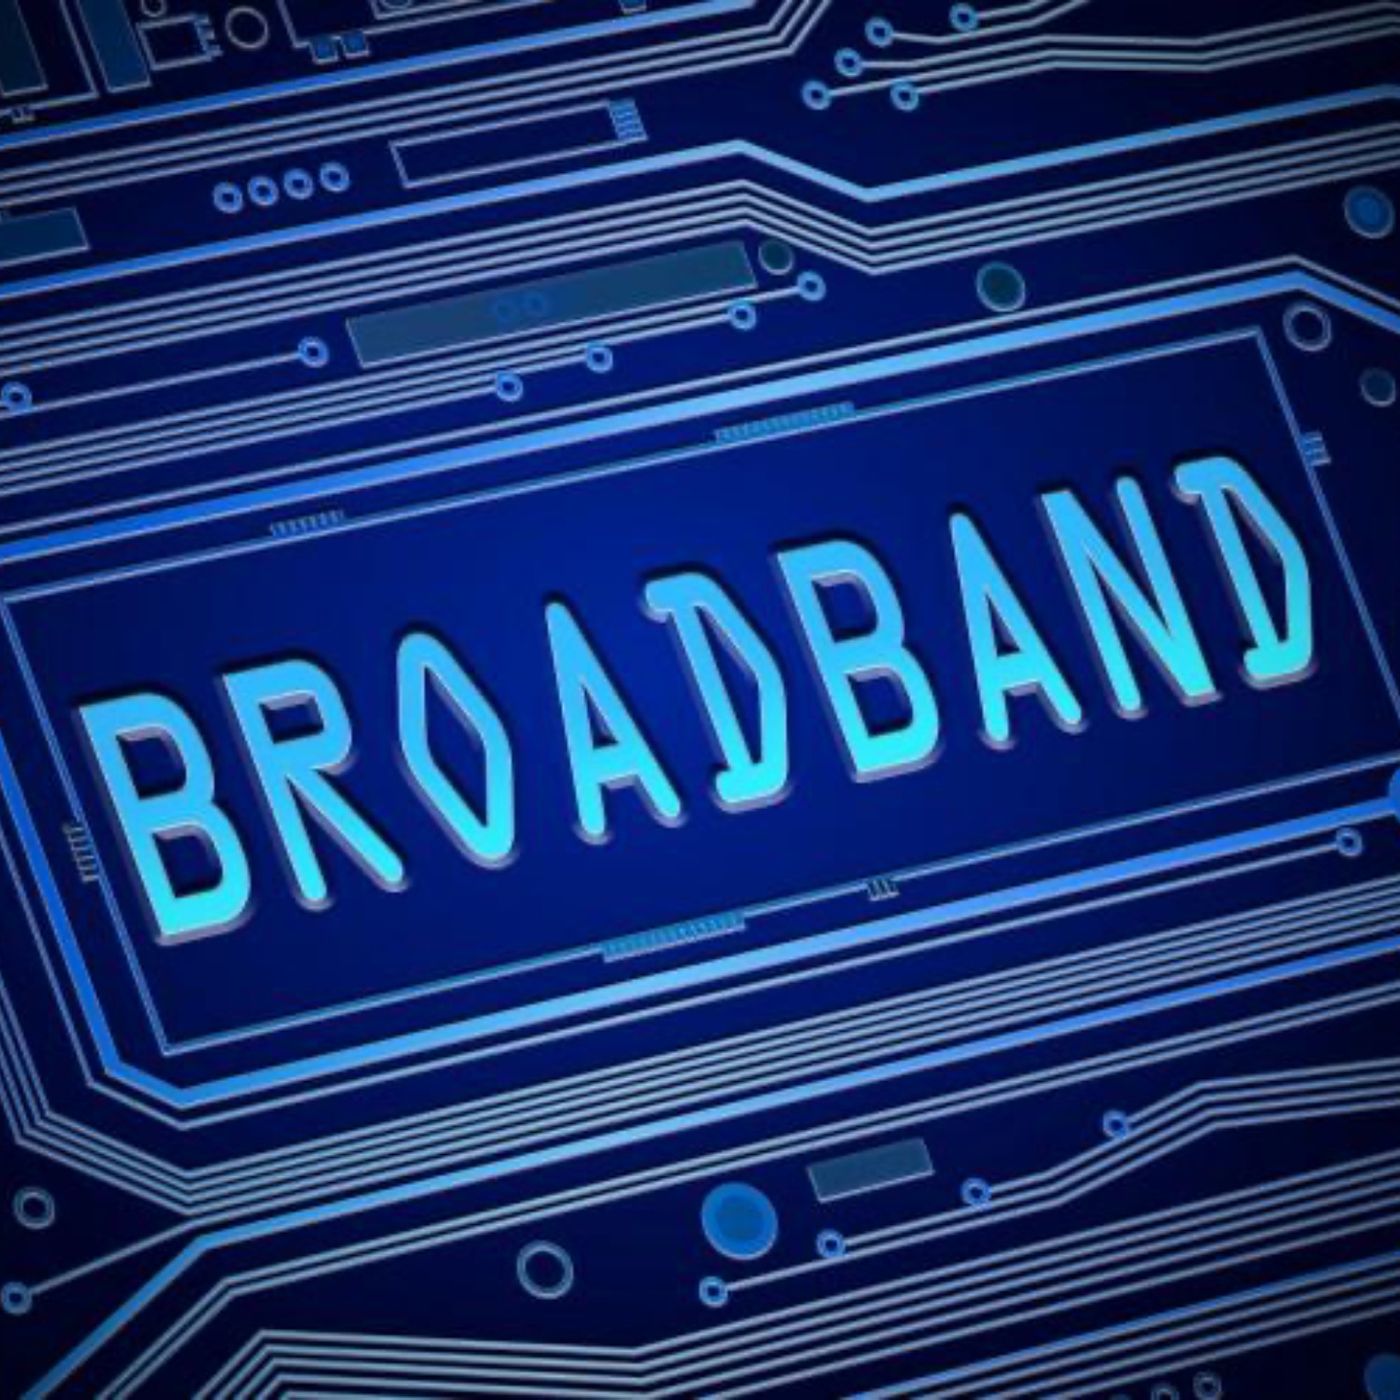 Should broadband access be compulsory across the UK?